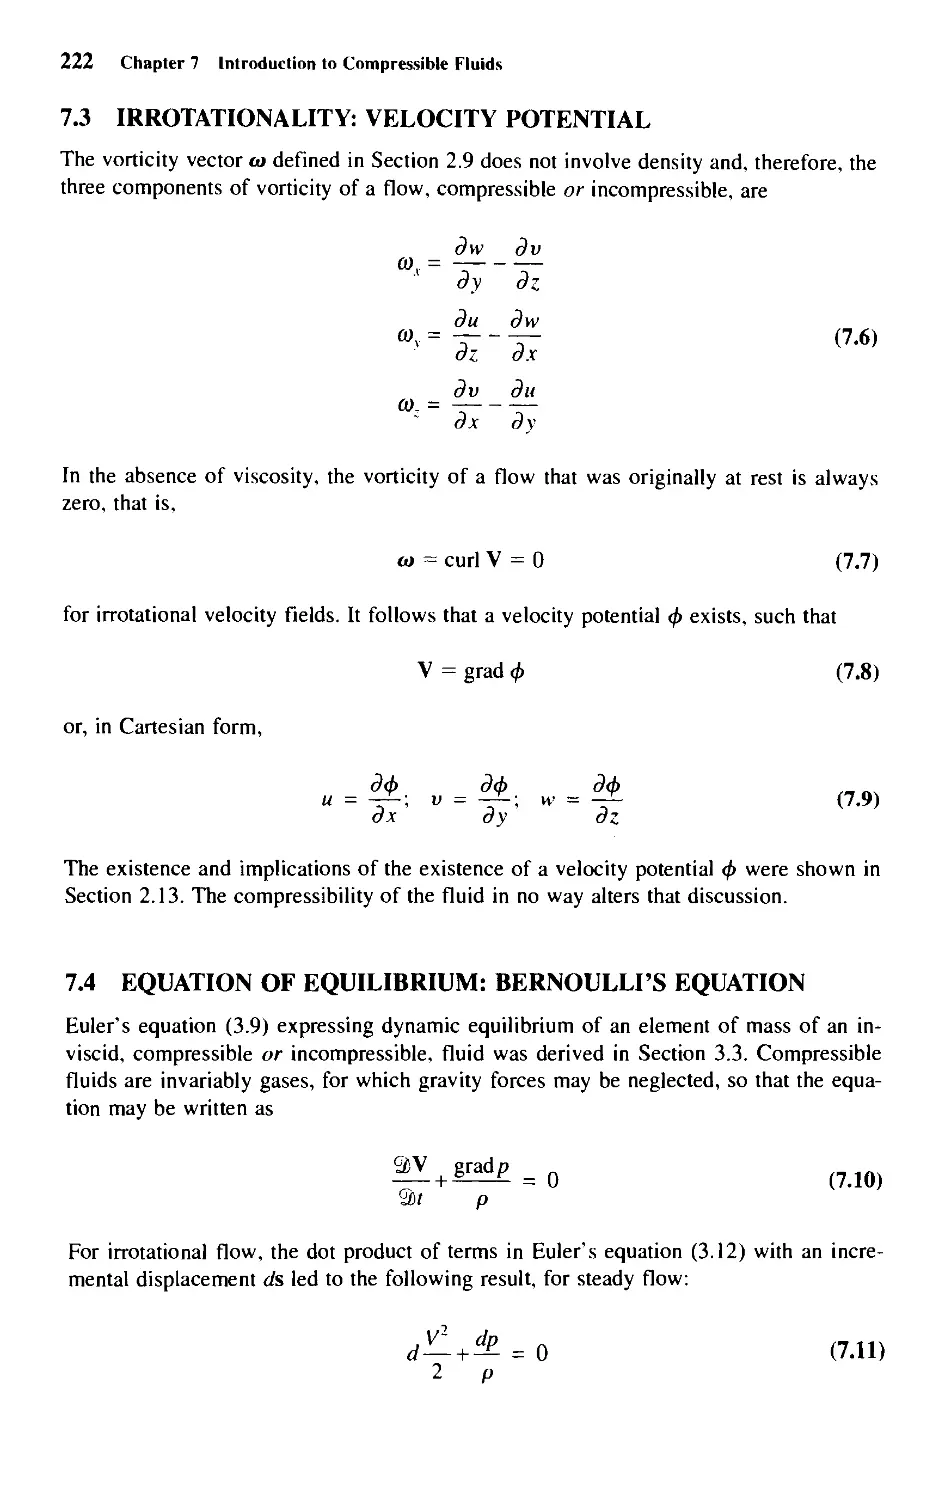 7.3 - Irrotationality: Velocity Potential
7.4 - Equation of Equilibrium: Bernoulli's Equation